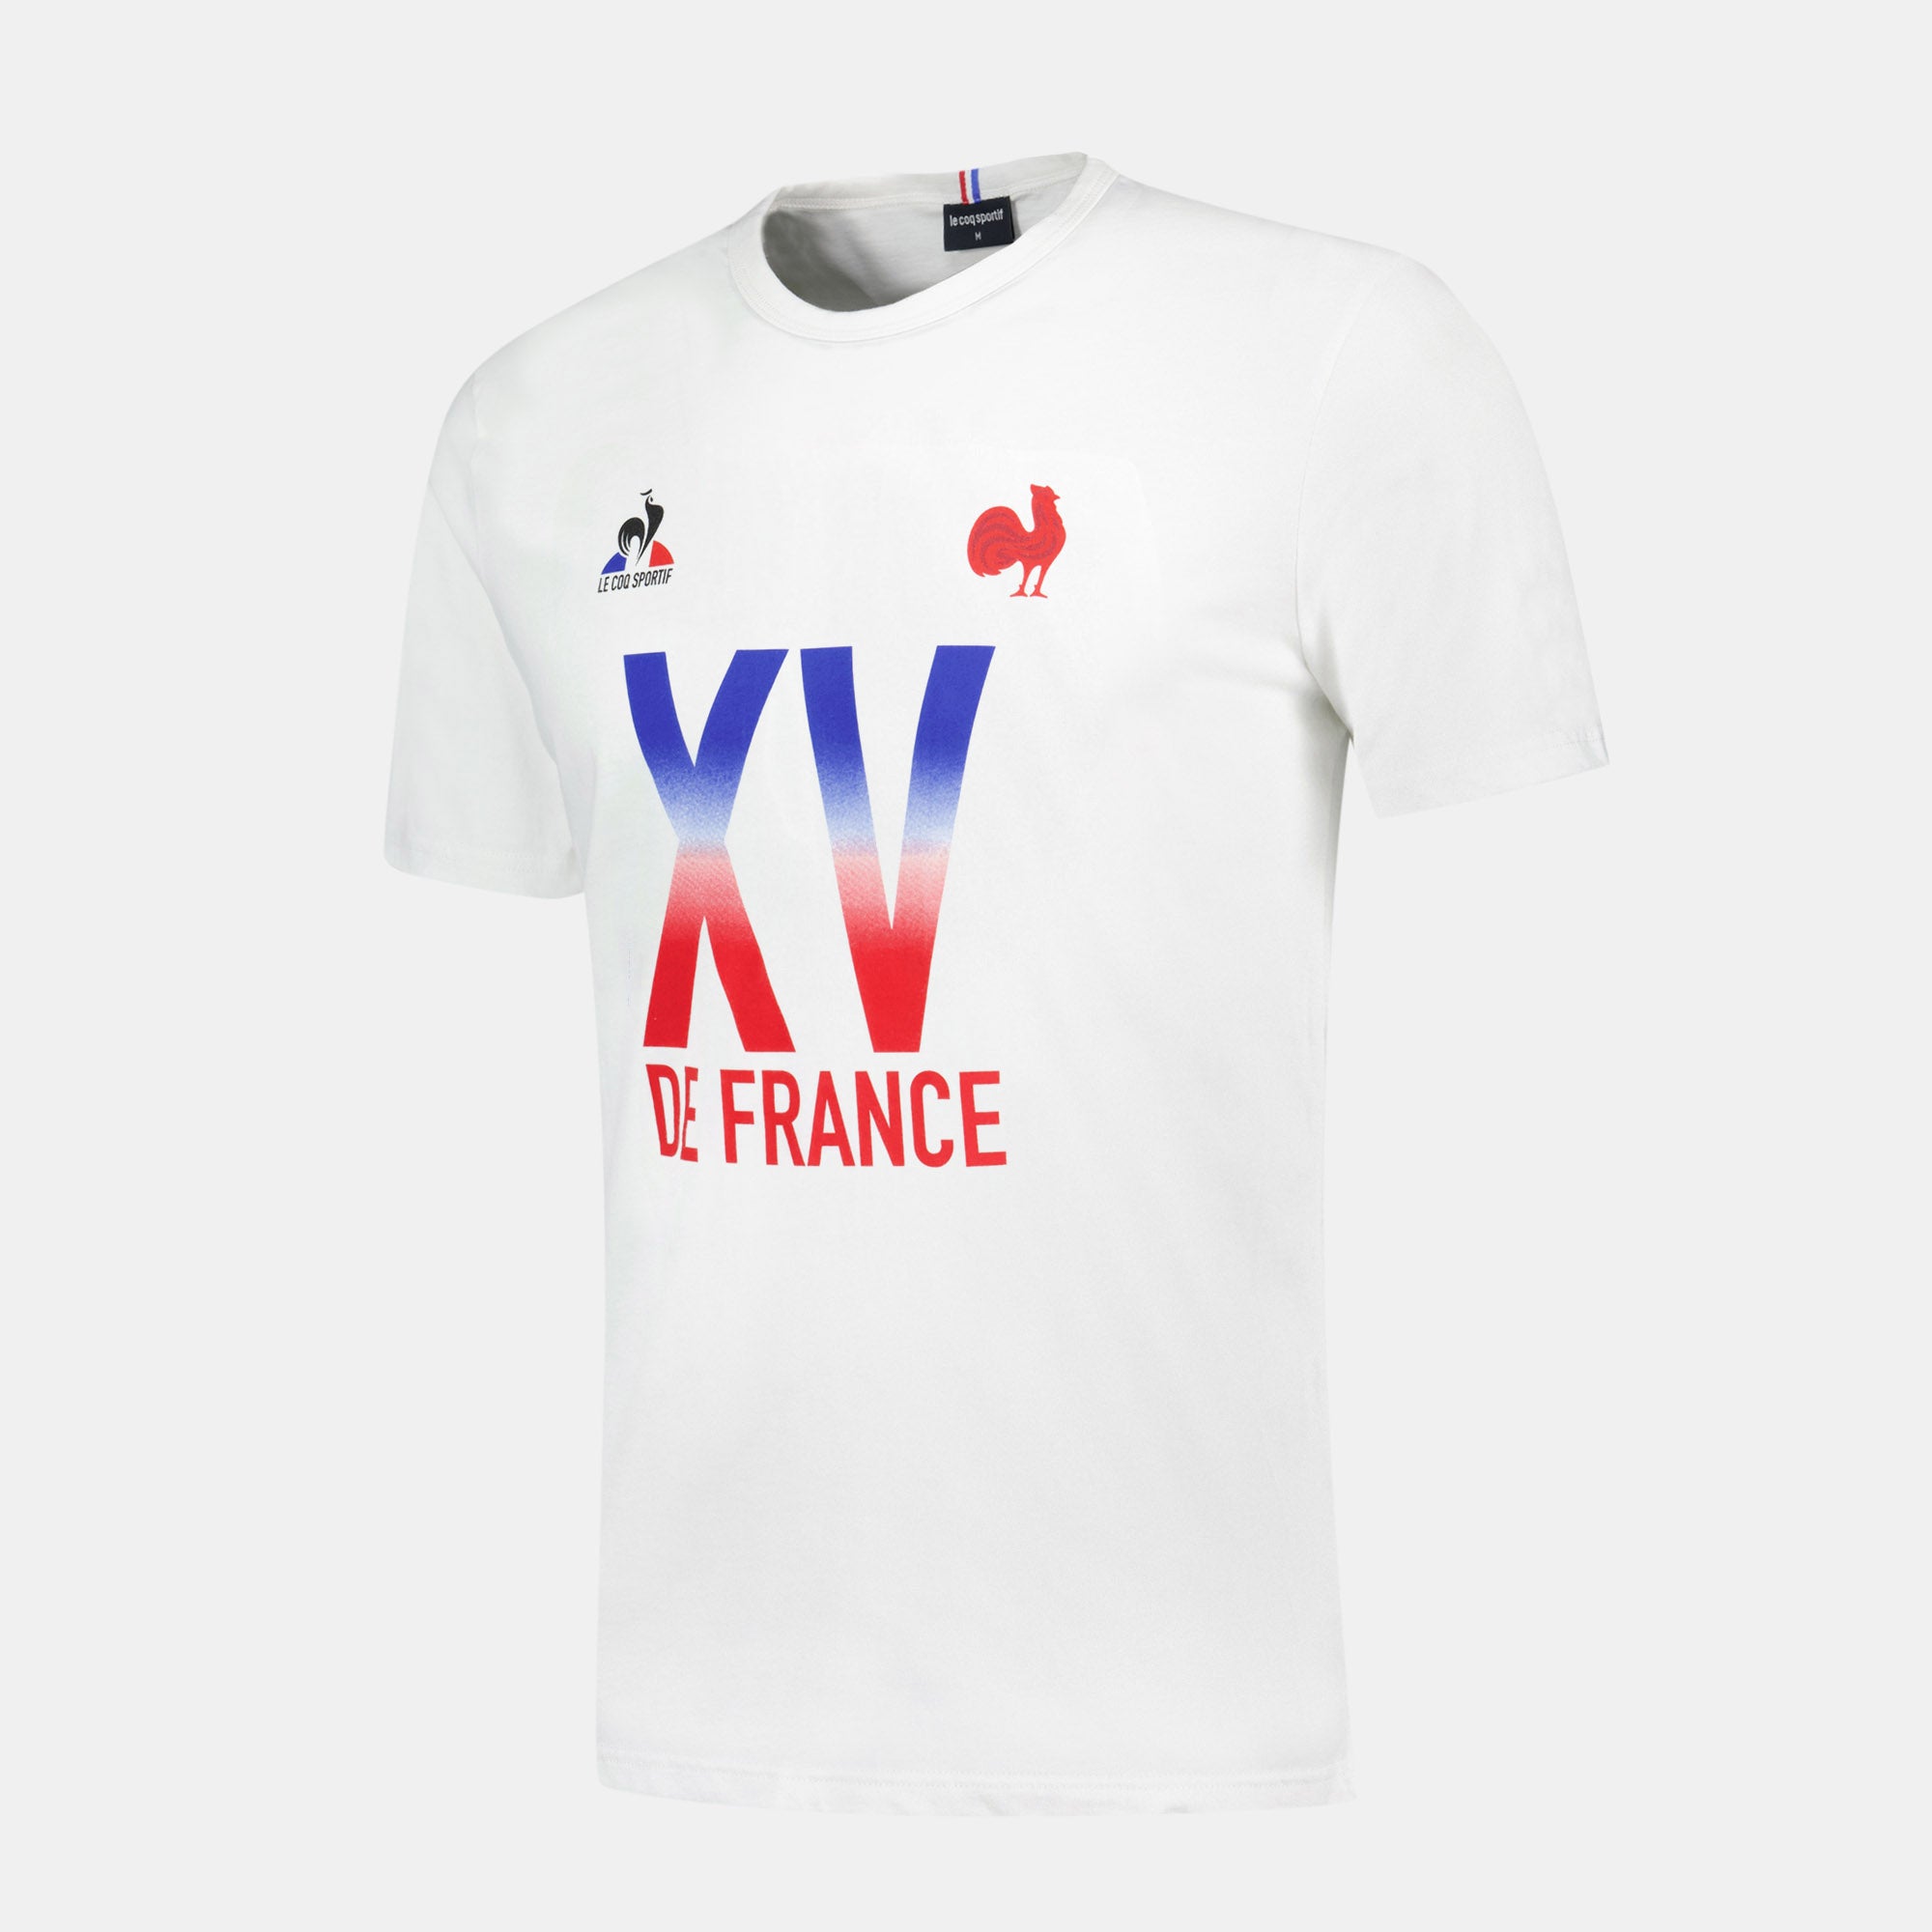 2320109-FFR FANWEAR Tee SS N°2 M new optical whi  | Camiseta Hombre XV de France